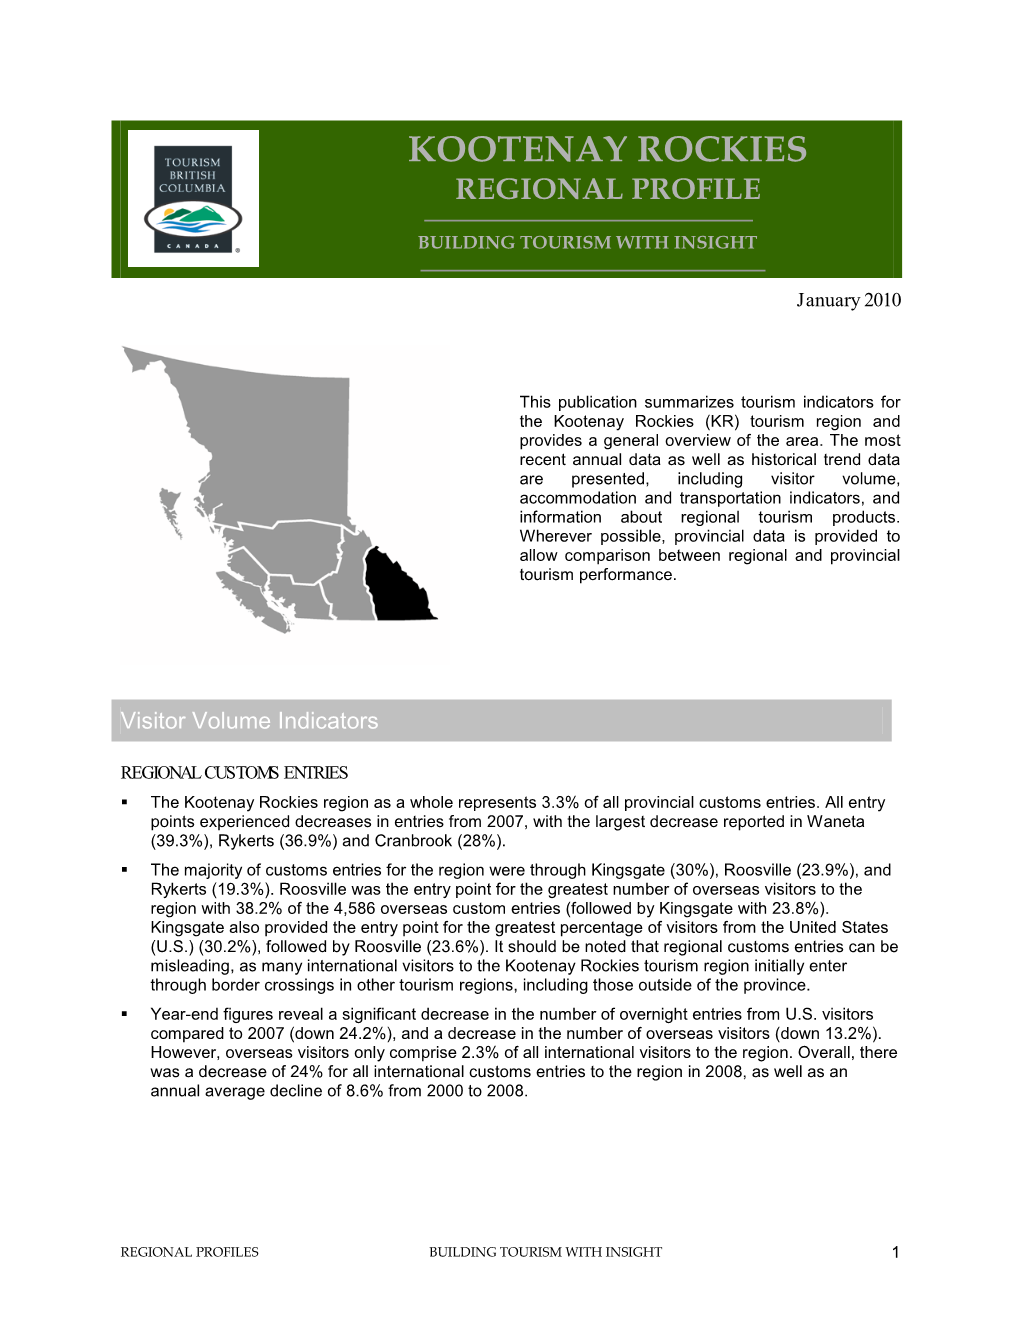 Regional Profiles – Kootenay Rockies